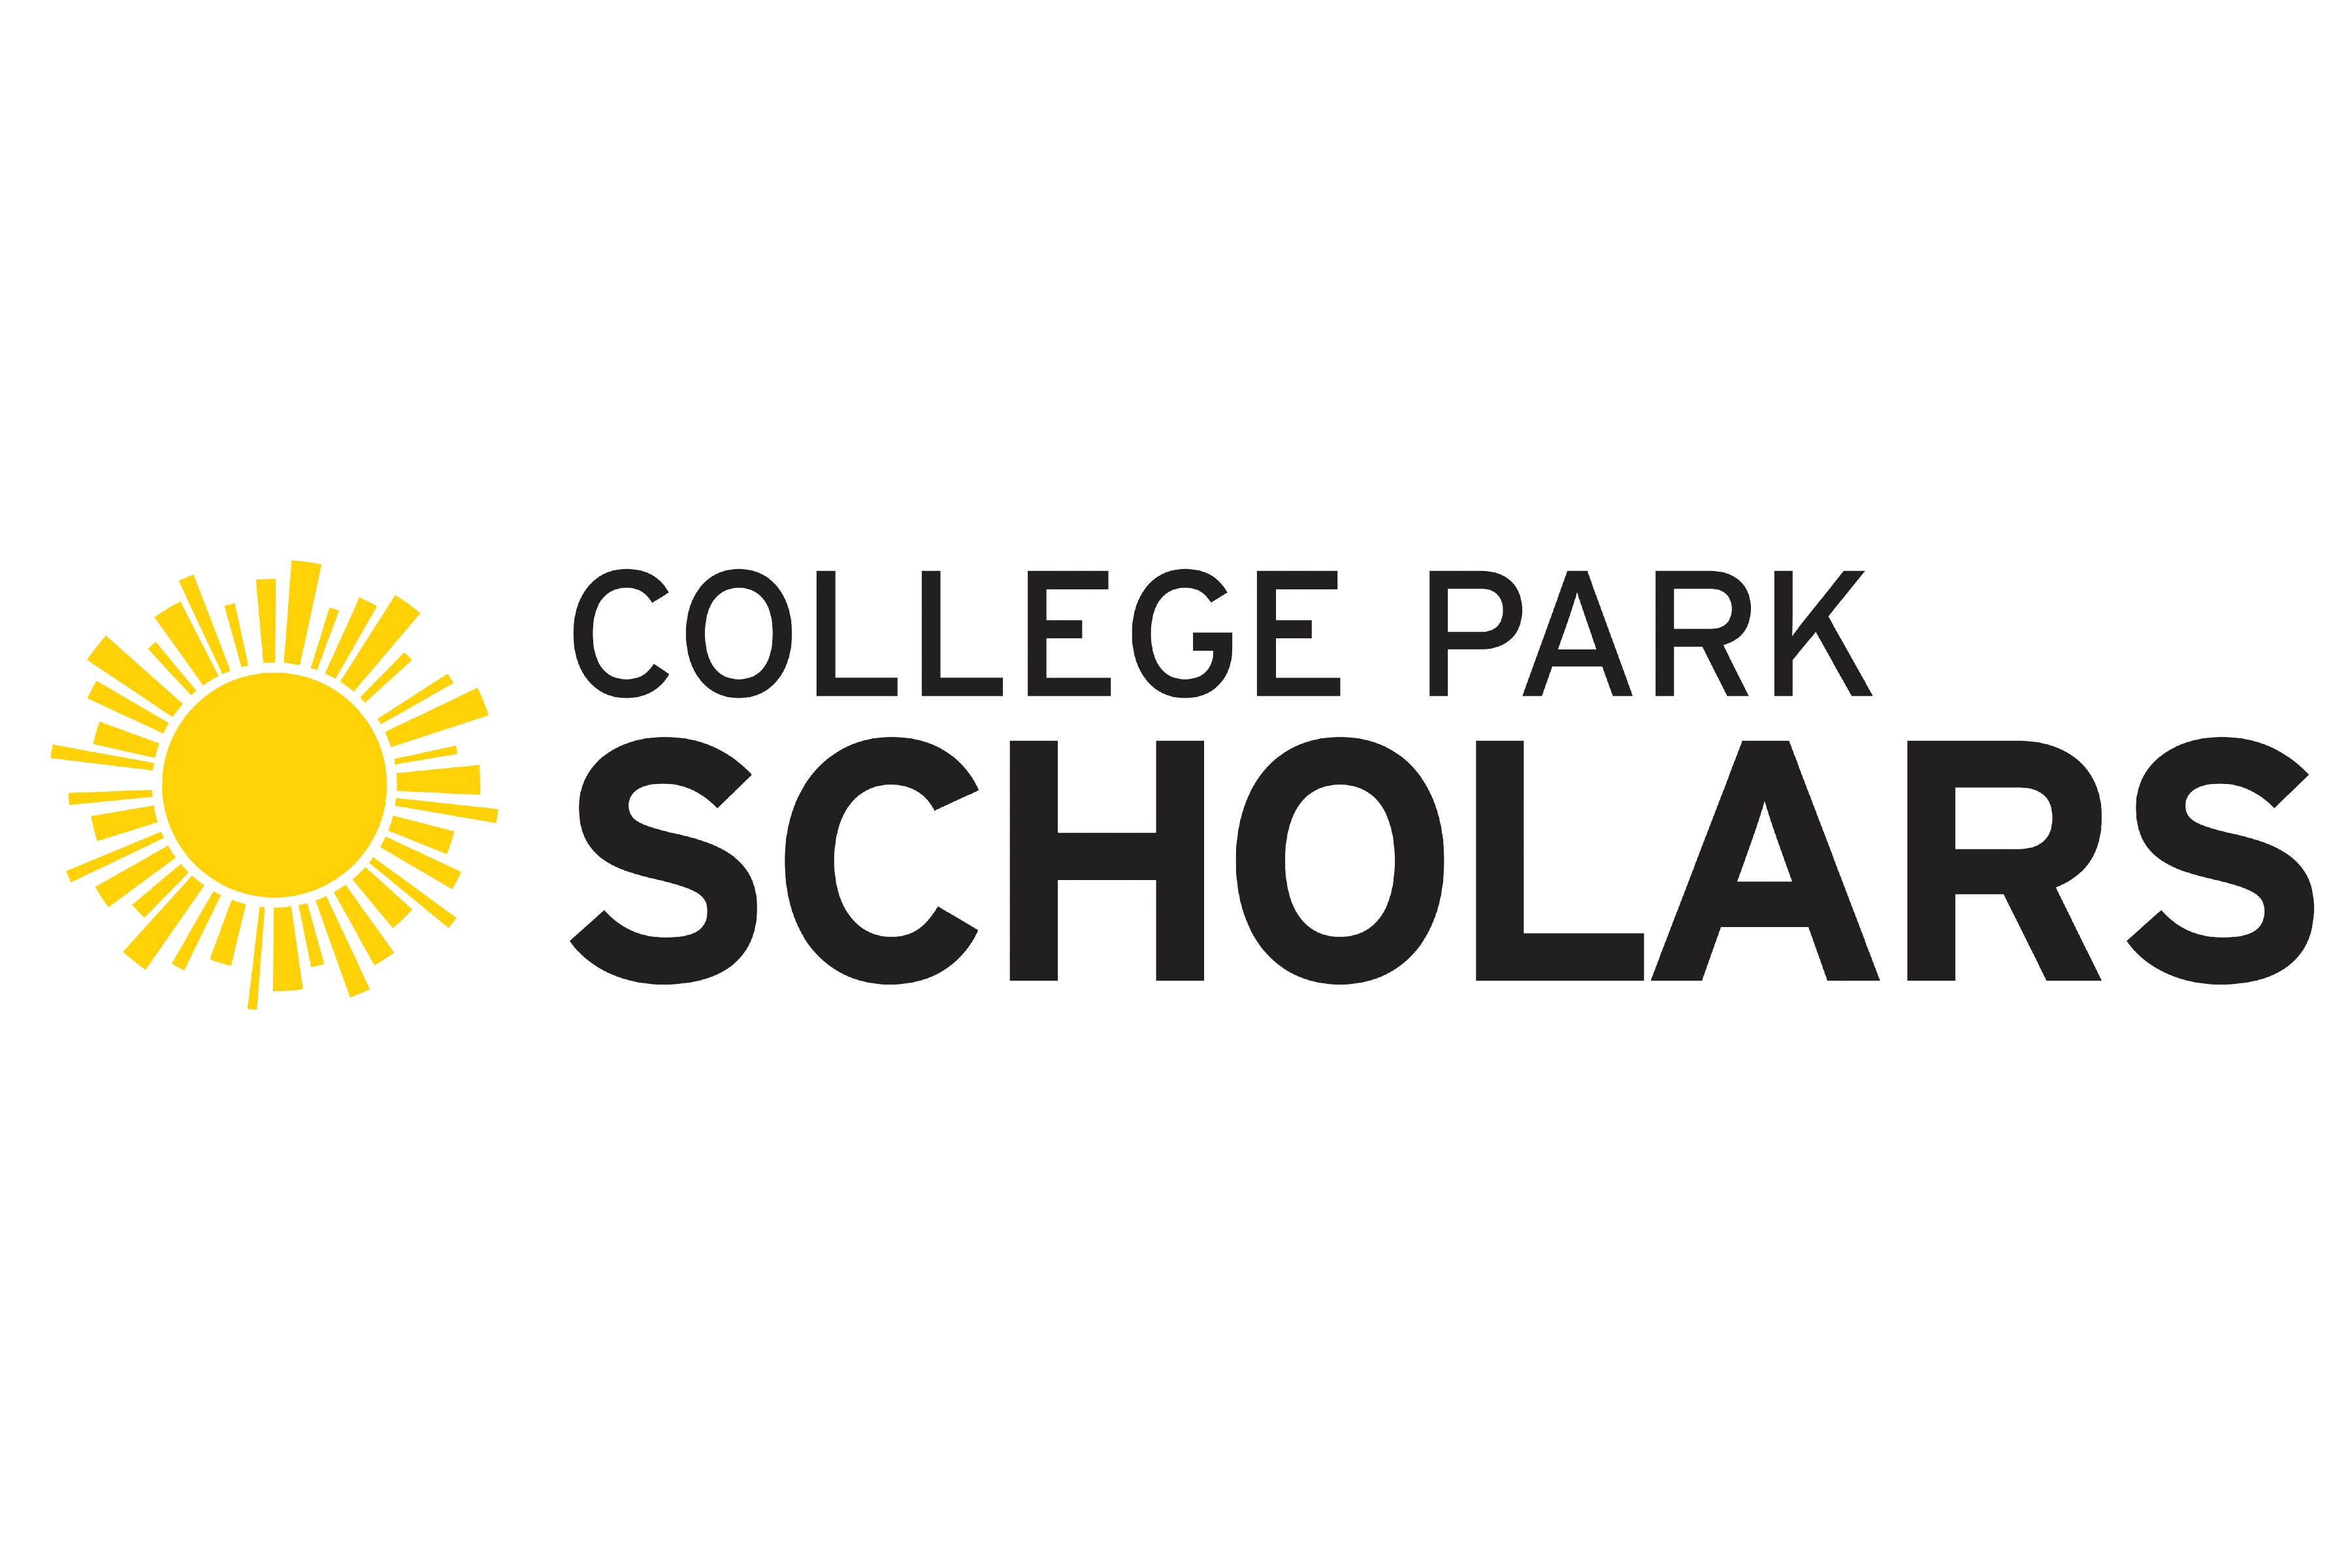 College Park Scholars